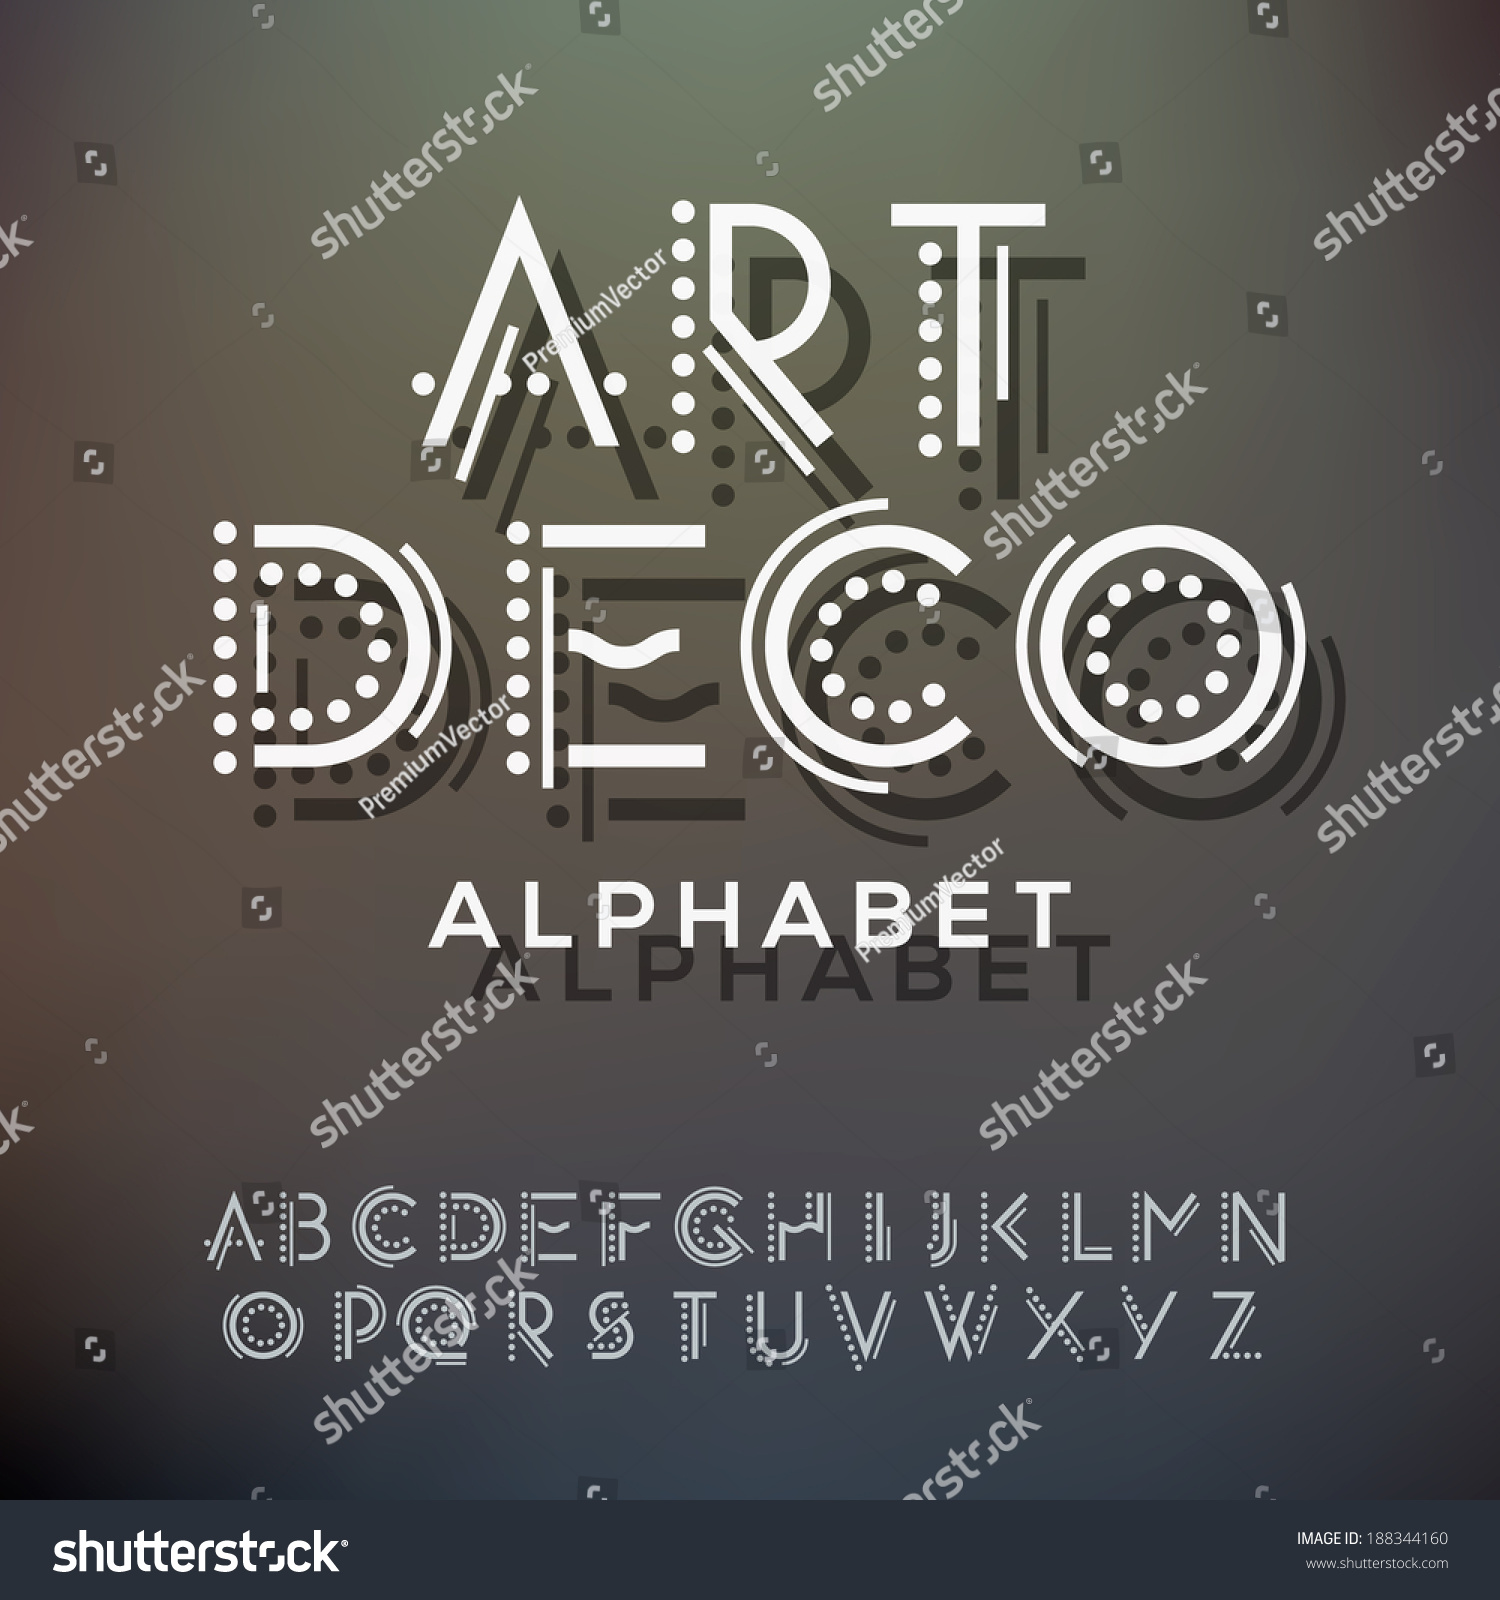 Alphabet Letters Collection, Art Deco Style, Vector Illustration ...